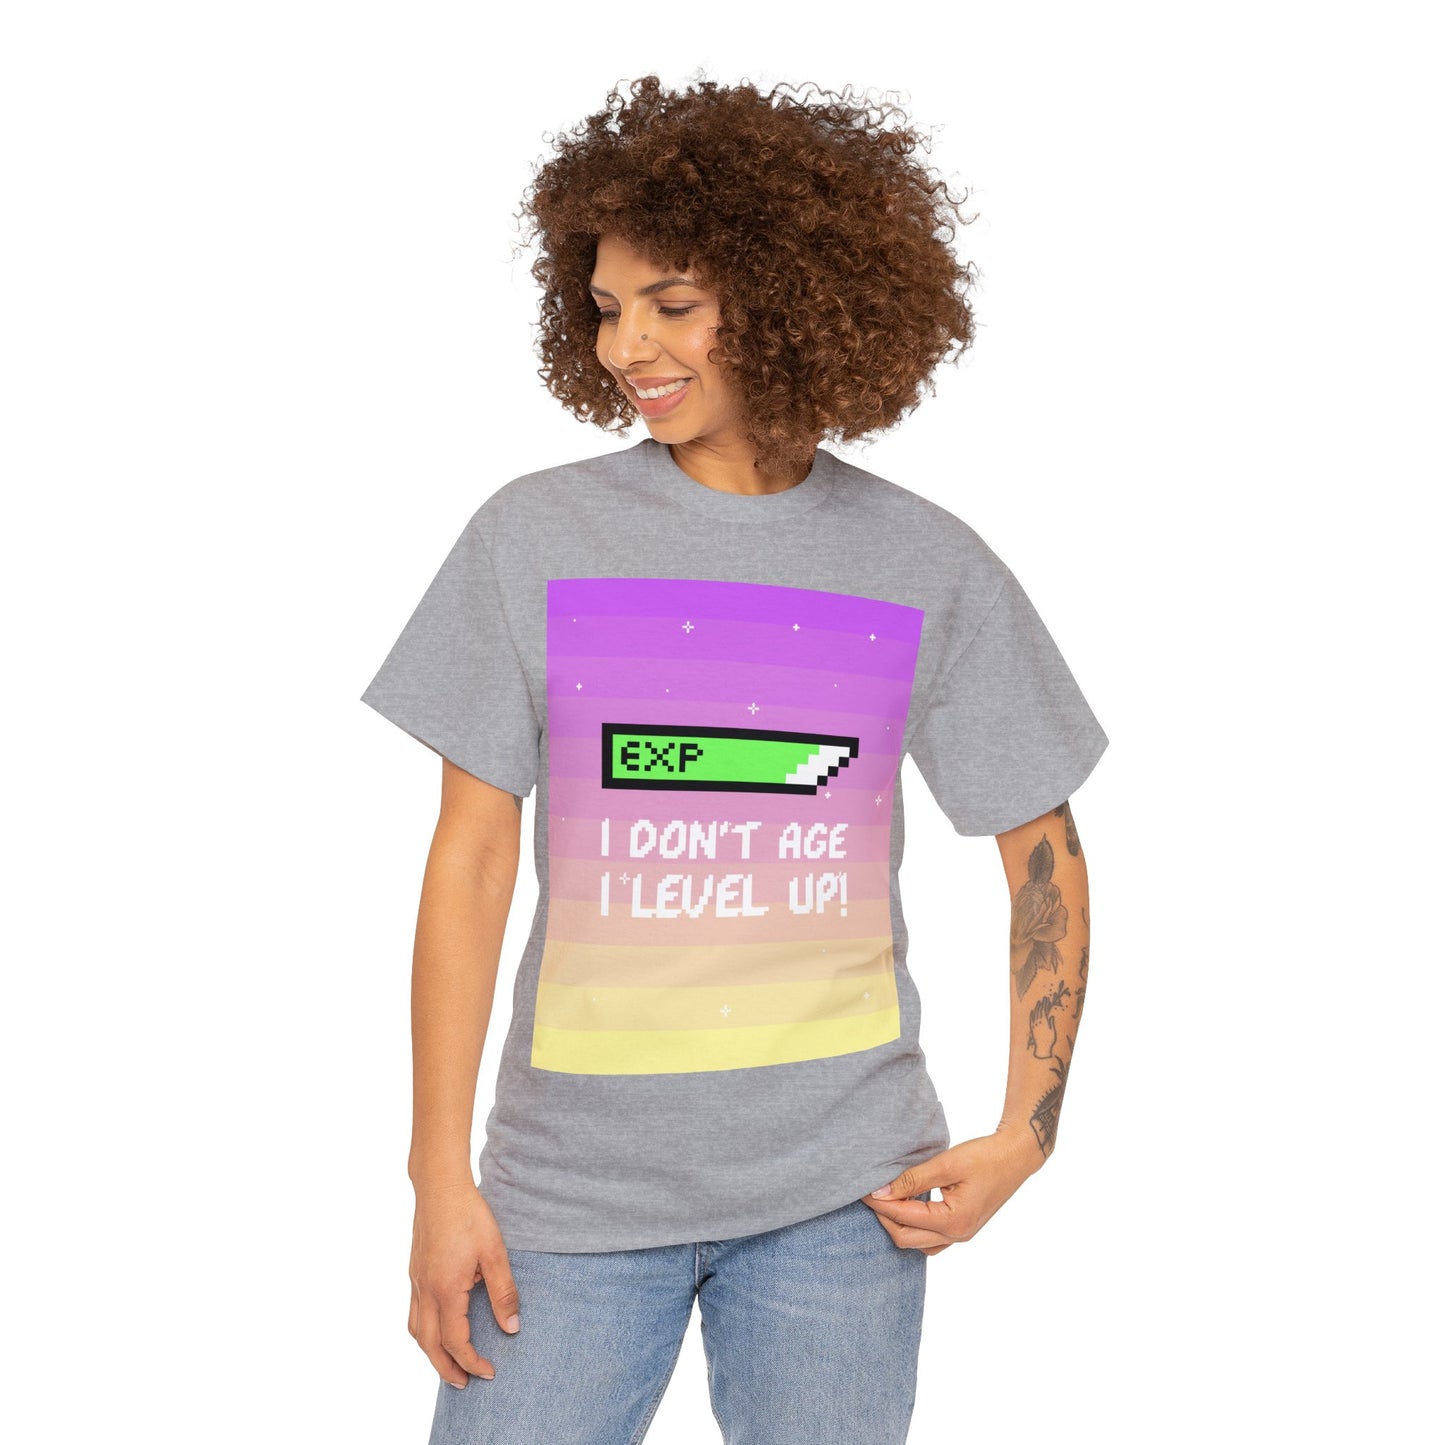 Camiseta unisex de algodón pesado